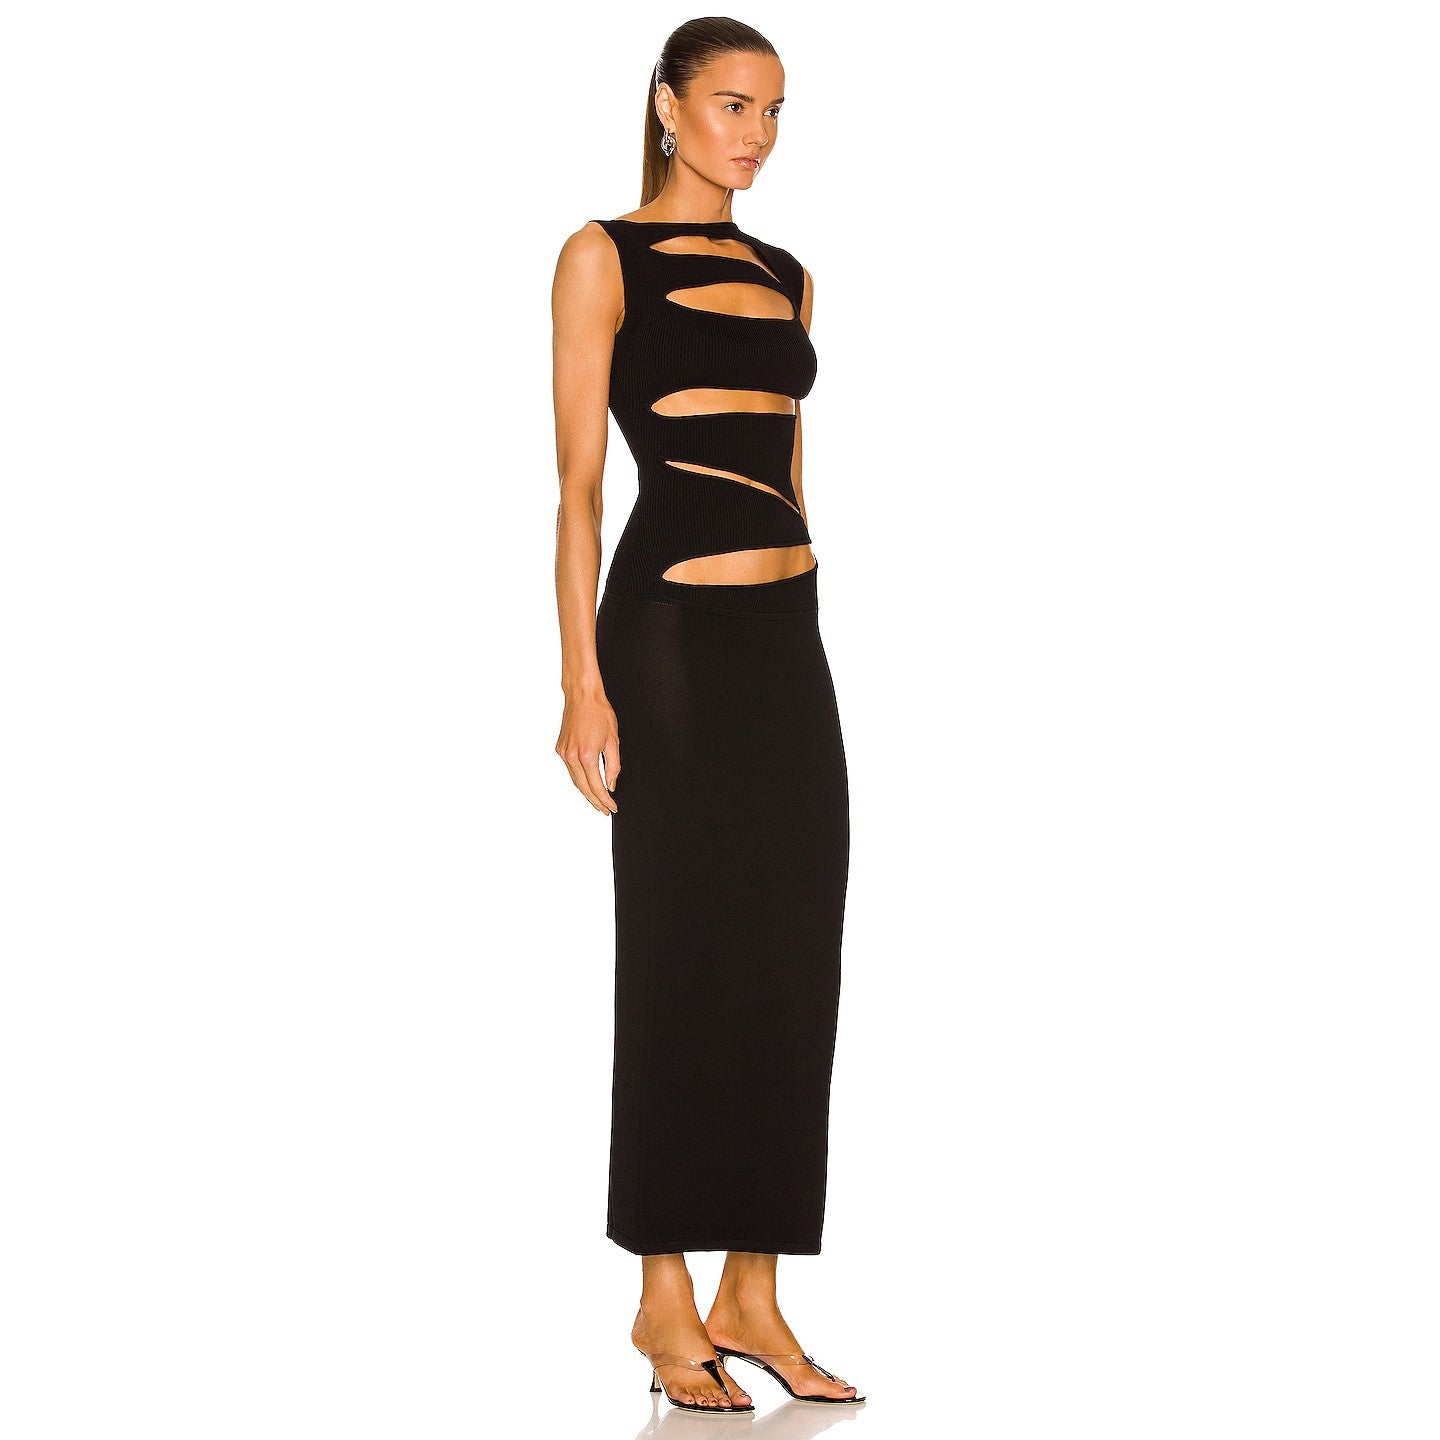 Summer Women's New Sexy Hollow High Waist Slim Slim Solid Color Long Dress